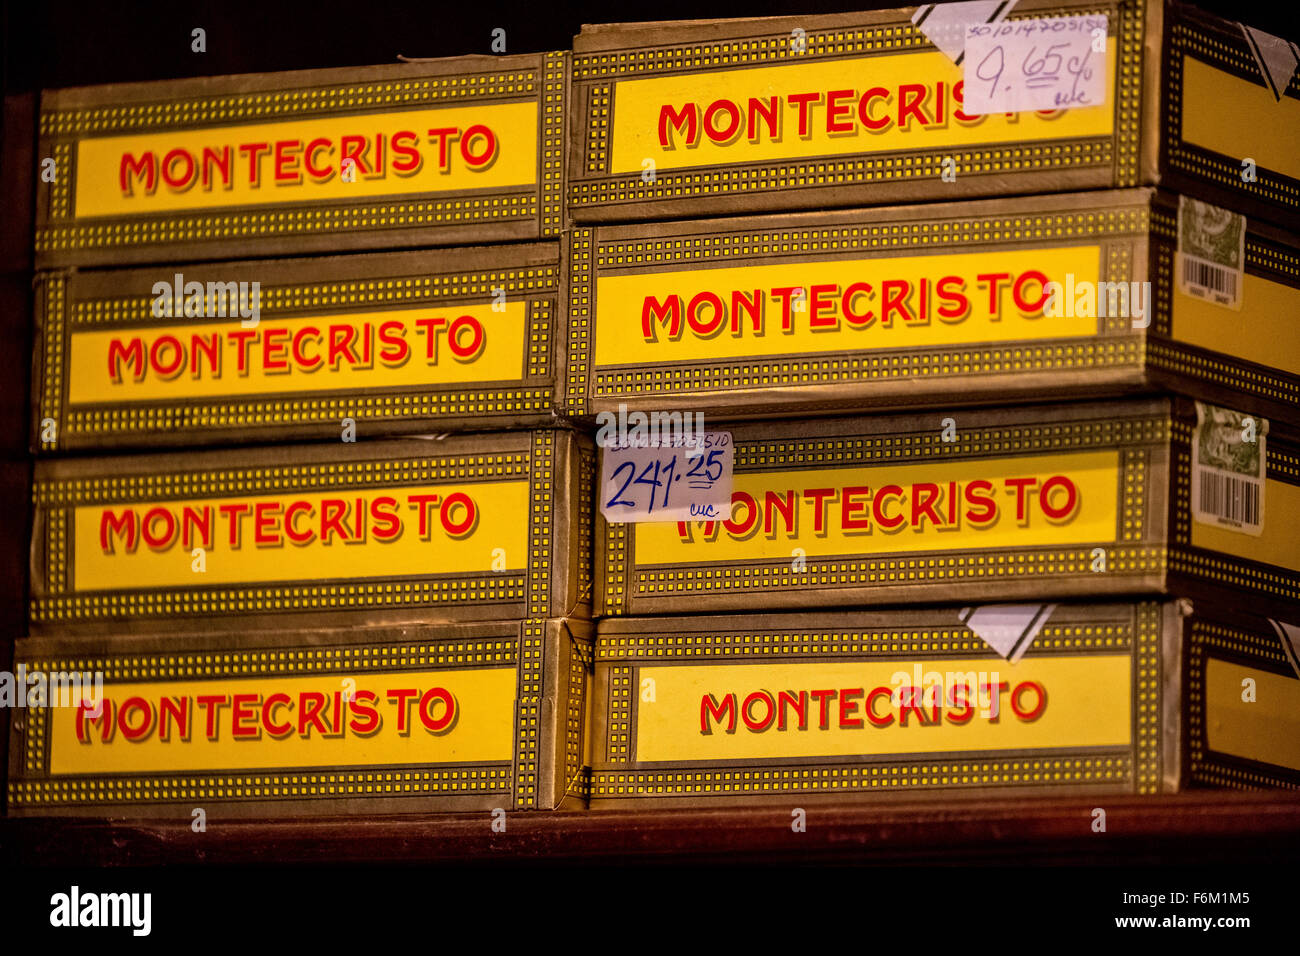 Nota marca di sigari di sigari cubani Montecristo in un sigaro cubano shop all Avana Vecchia, souvenir, La Habana, Cuba, Caraibi Foto Stock